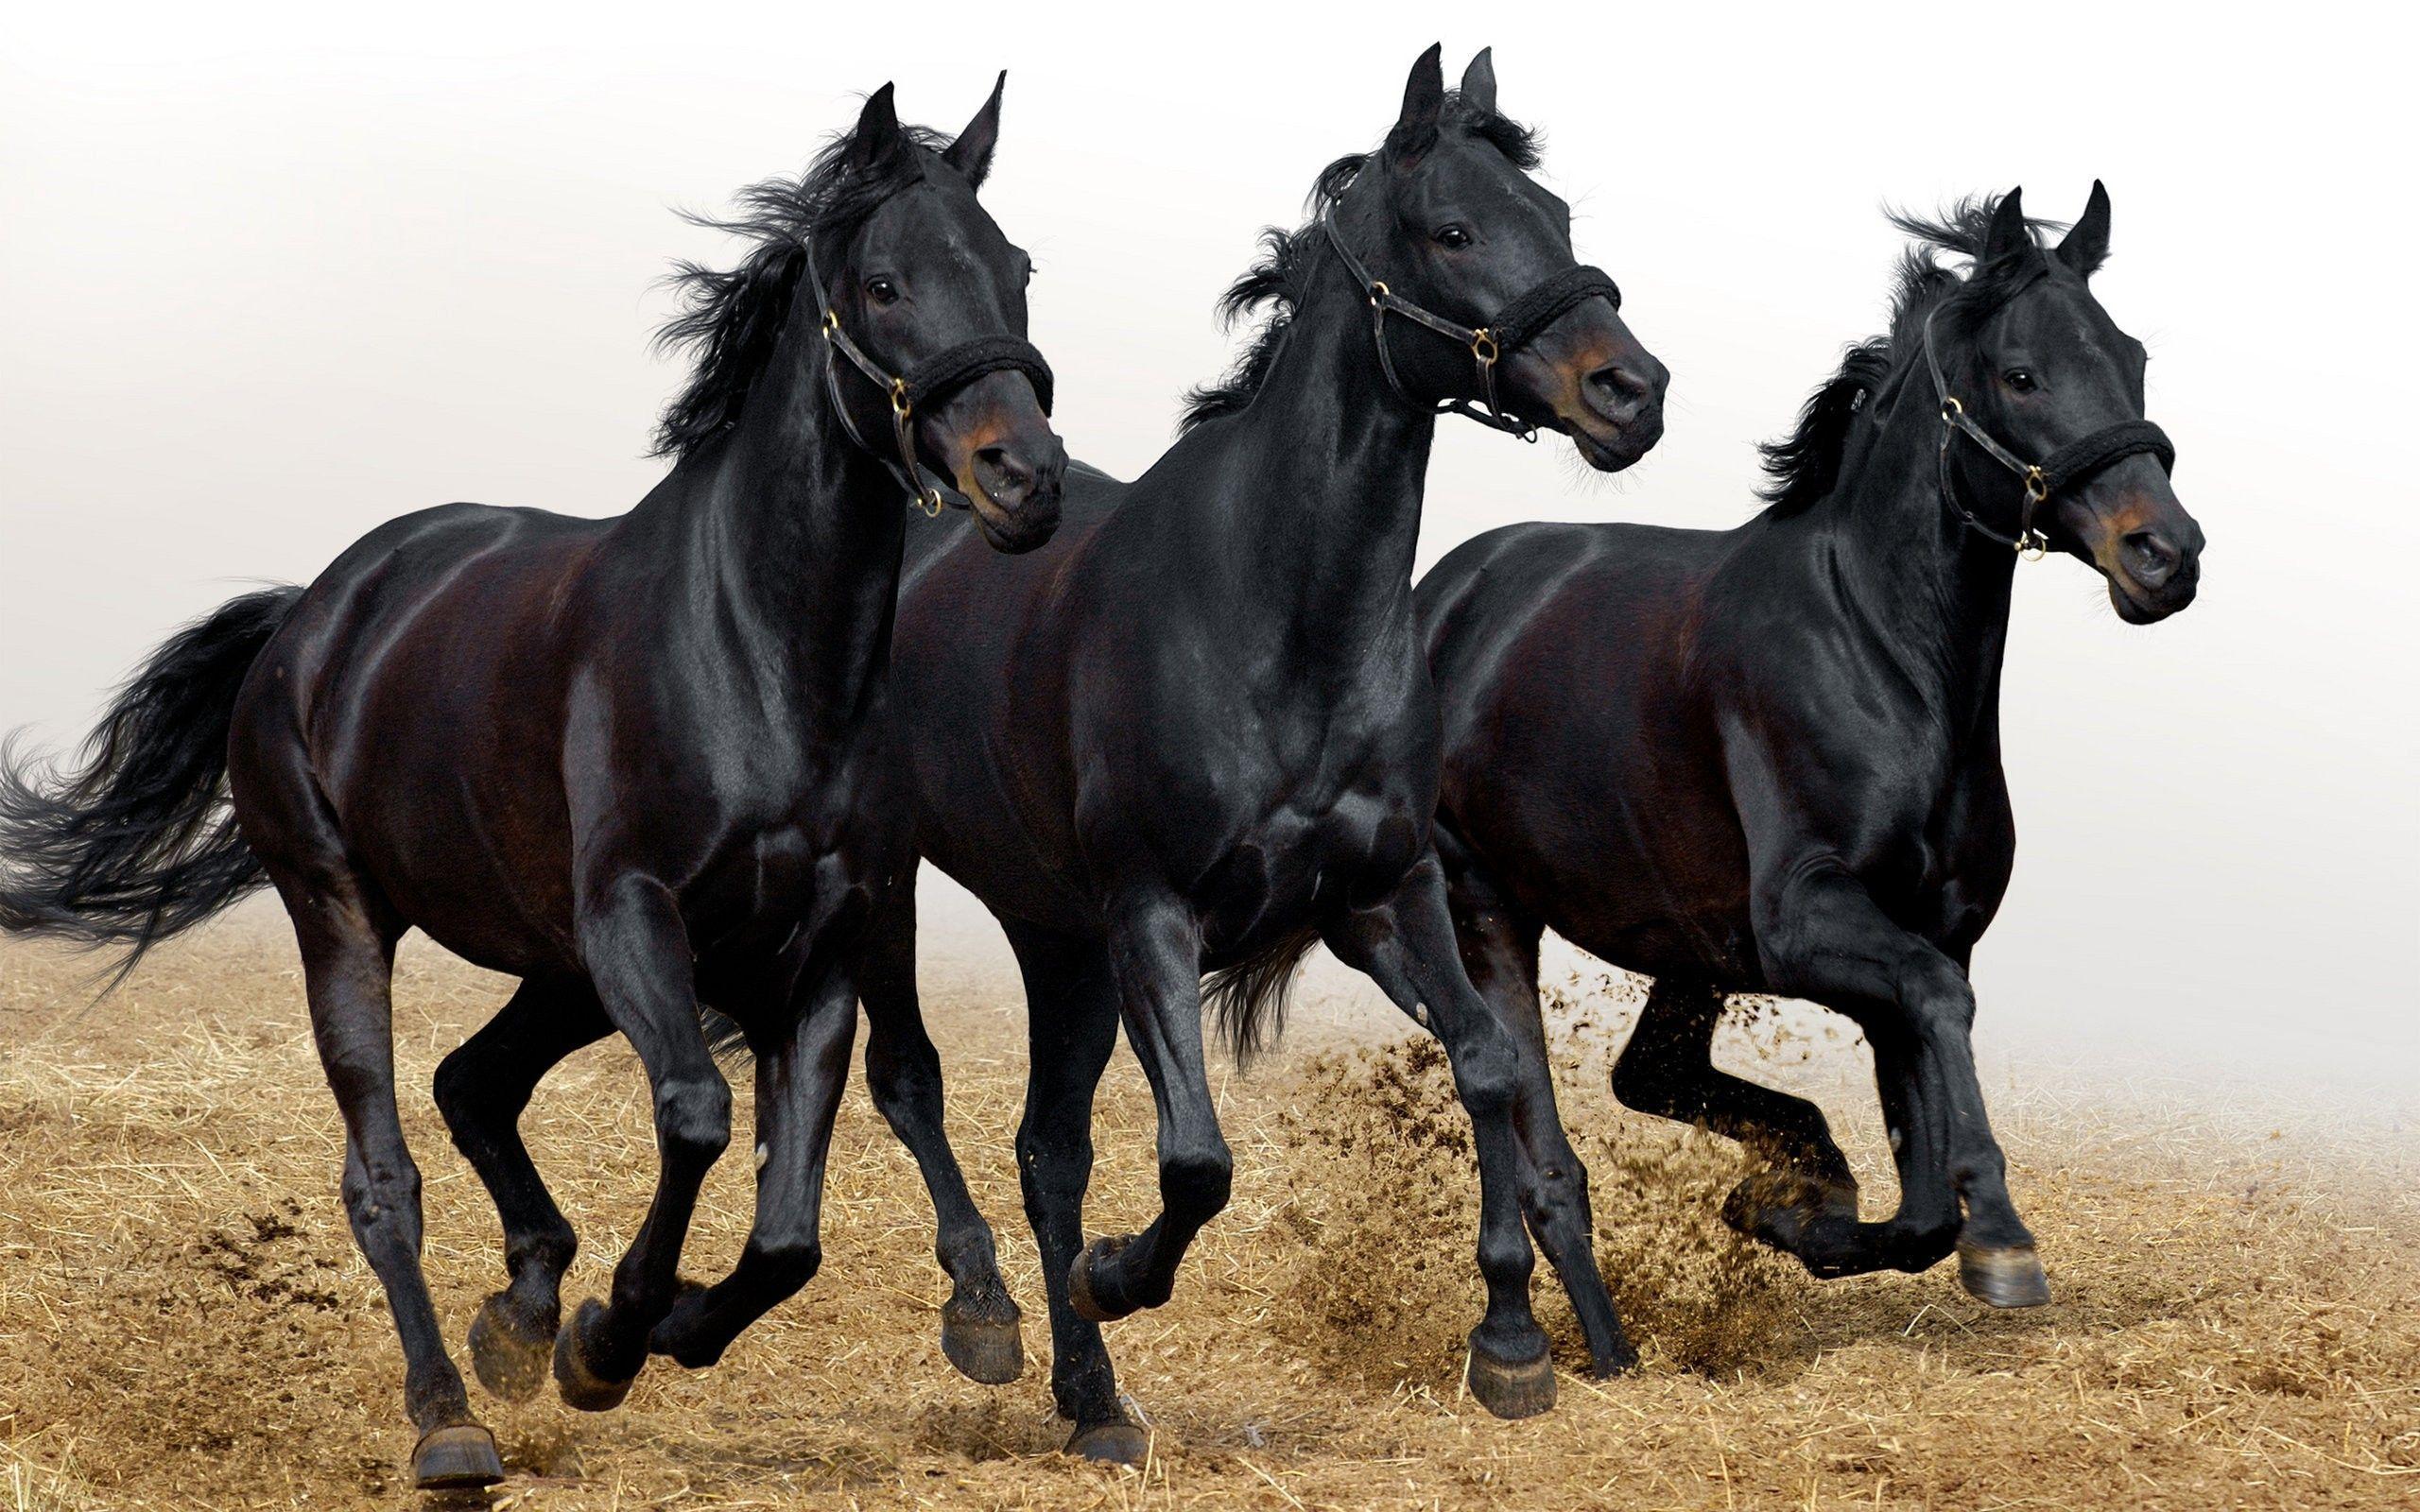 Animals black horses wallpaper. PC